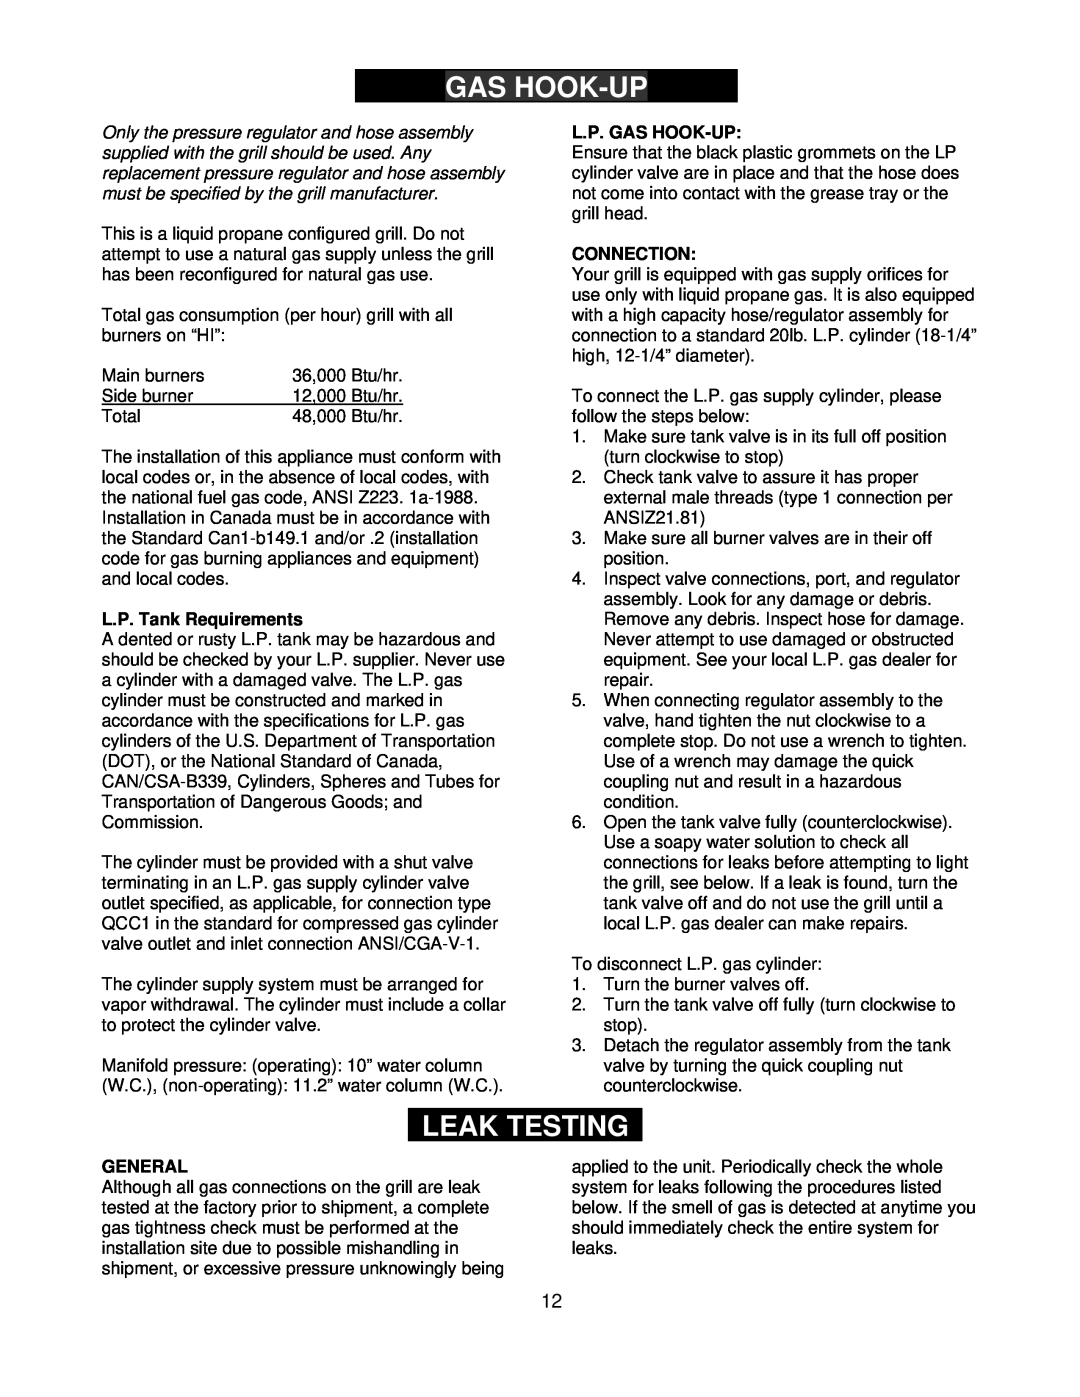 Nexgrill 720-0125-LP manual Leak Testing, L.P. Tank Requirements, L.P. Gas Hook-Up, Connection, General 